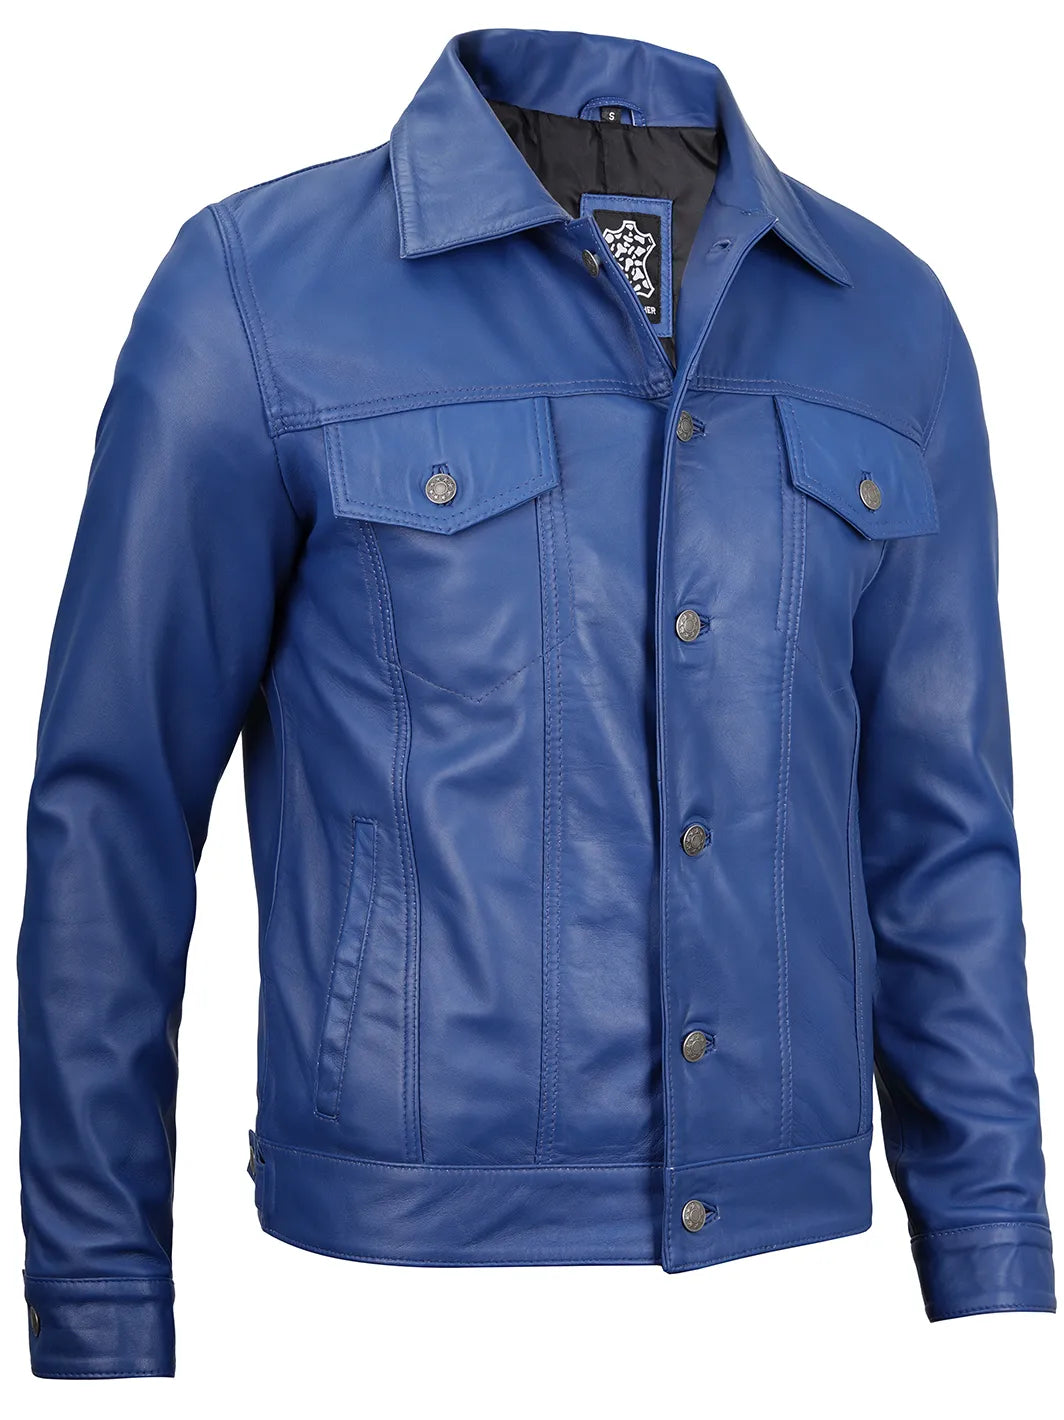 Mens blue leather trucker jacket